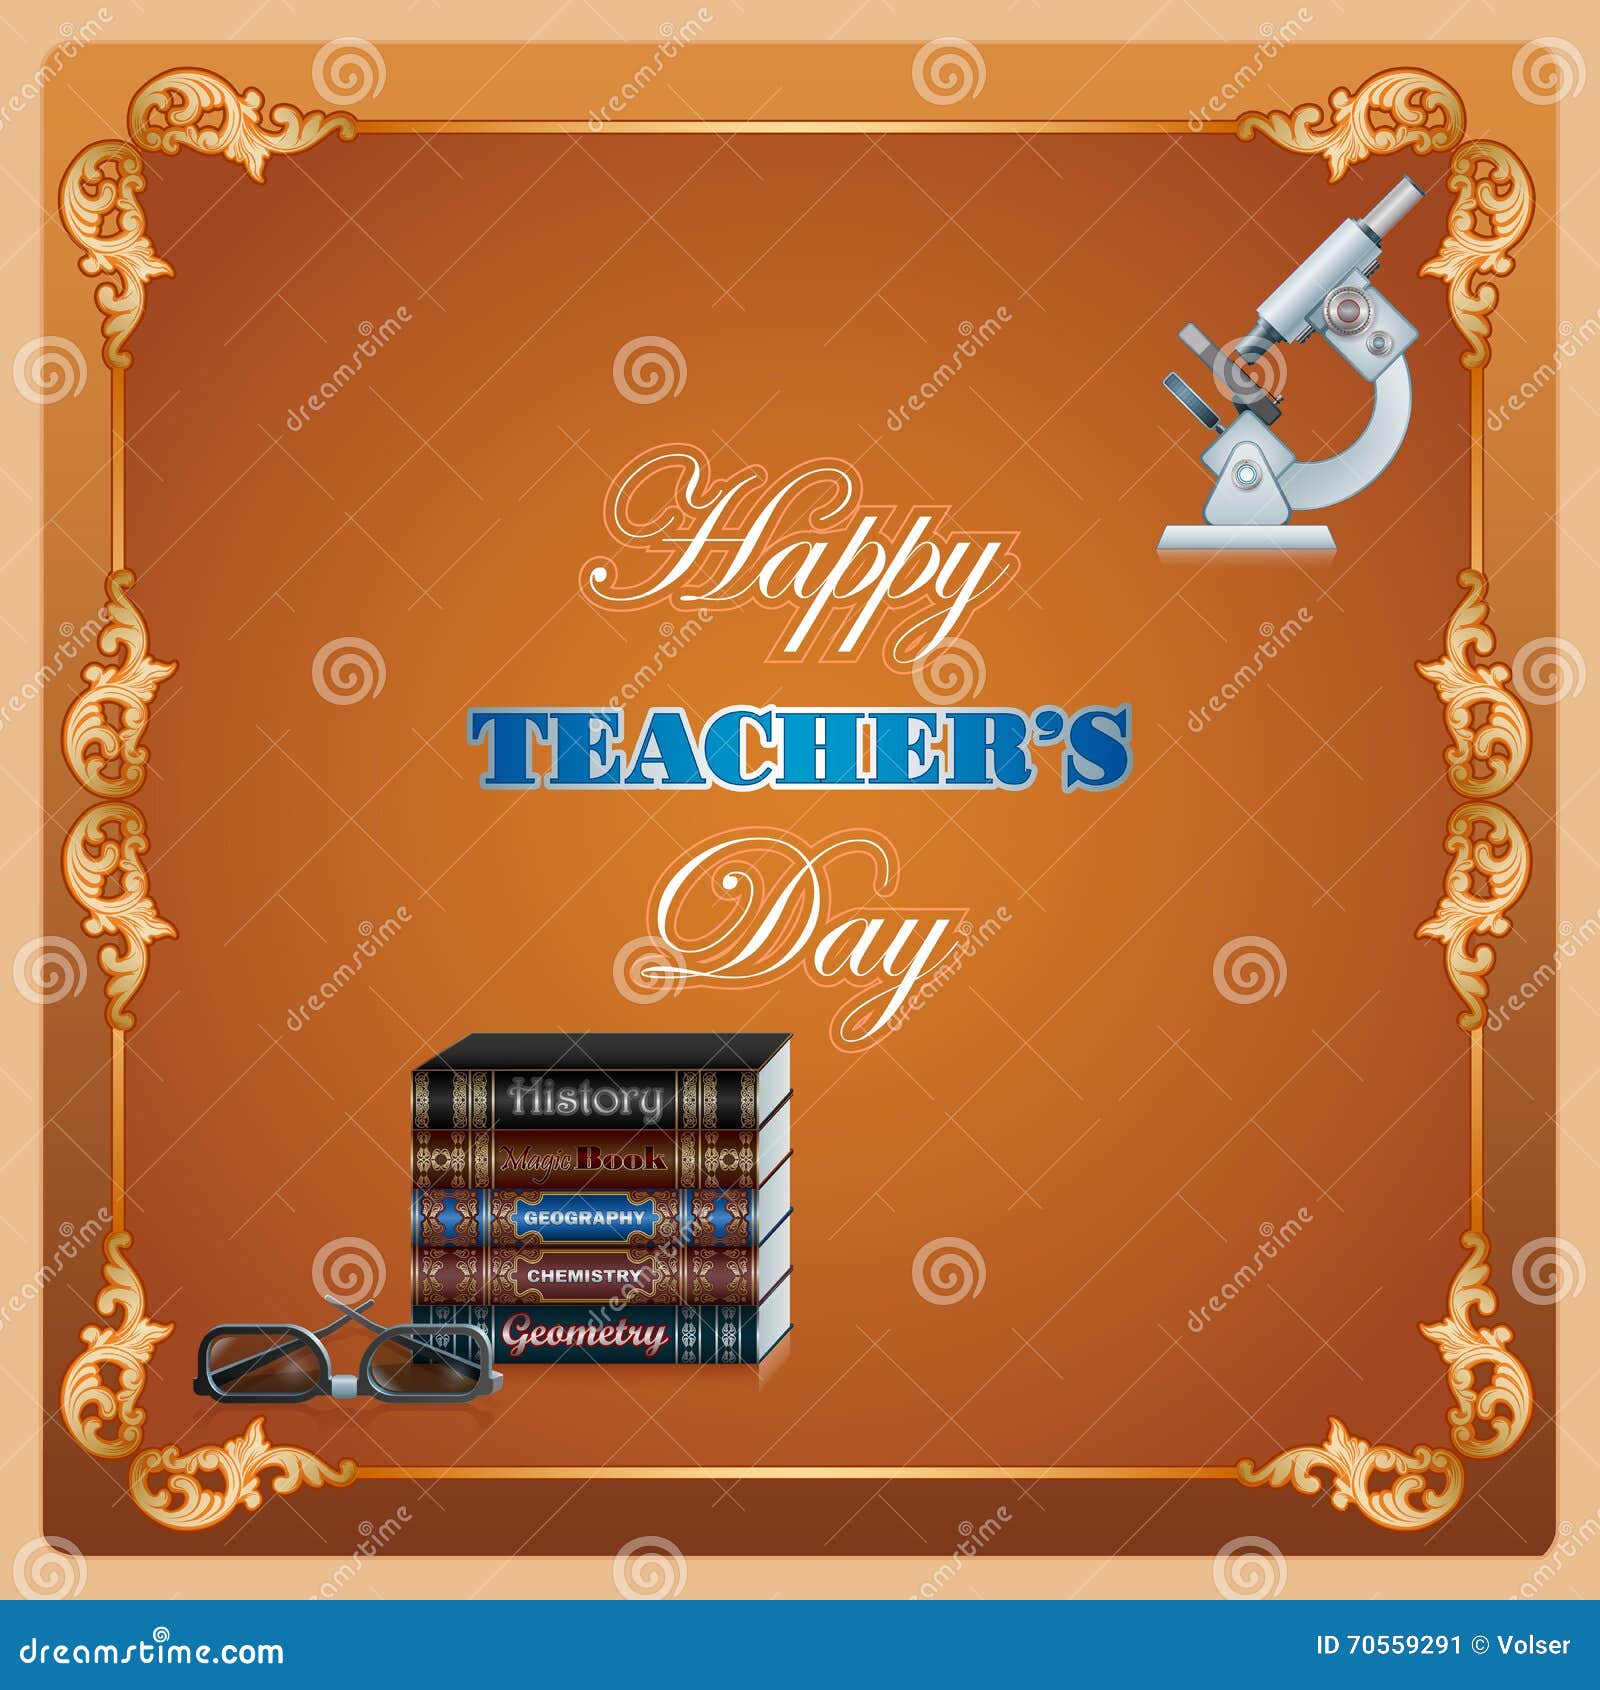 Happy Teacher's Day Background Illustration 70559291 - Megapixl